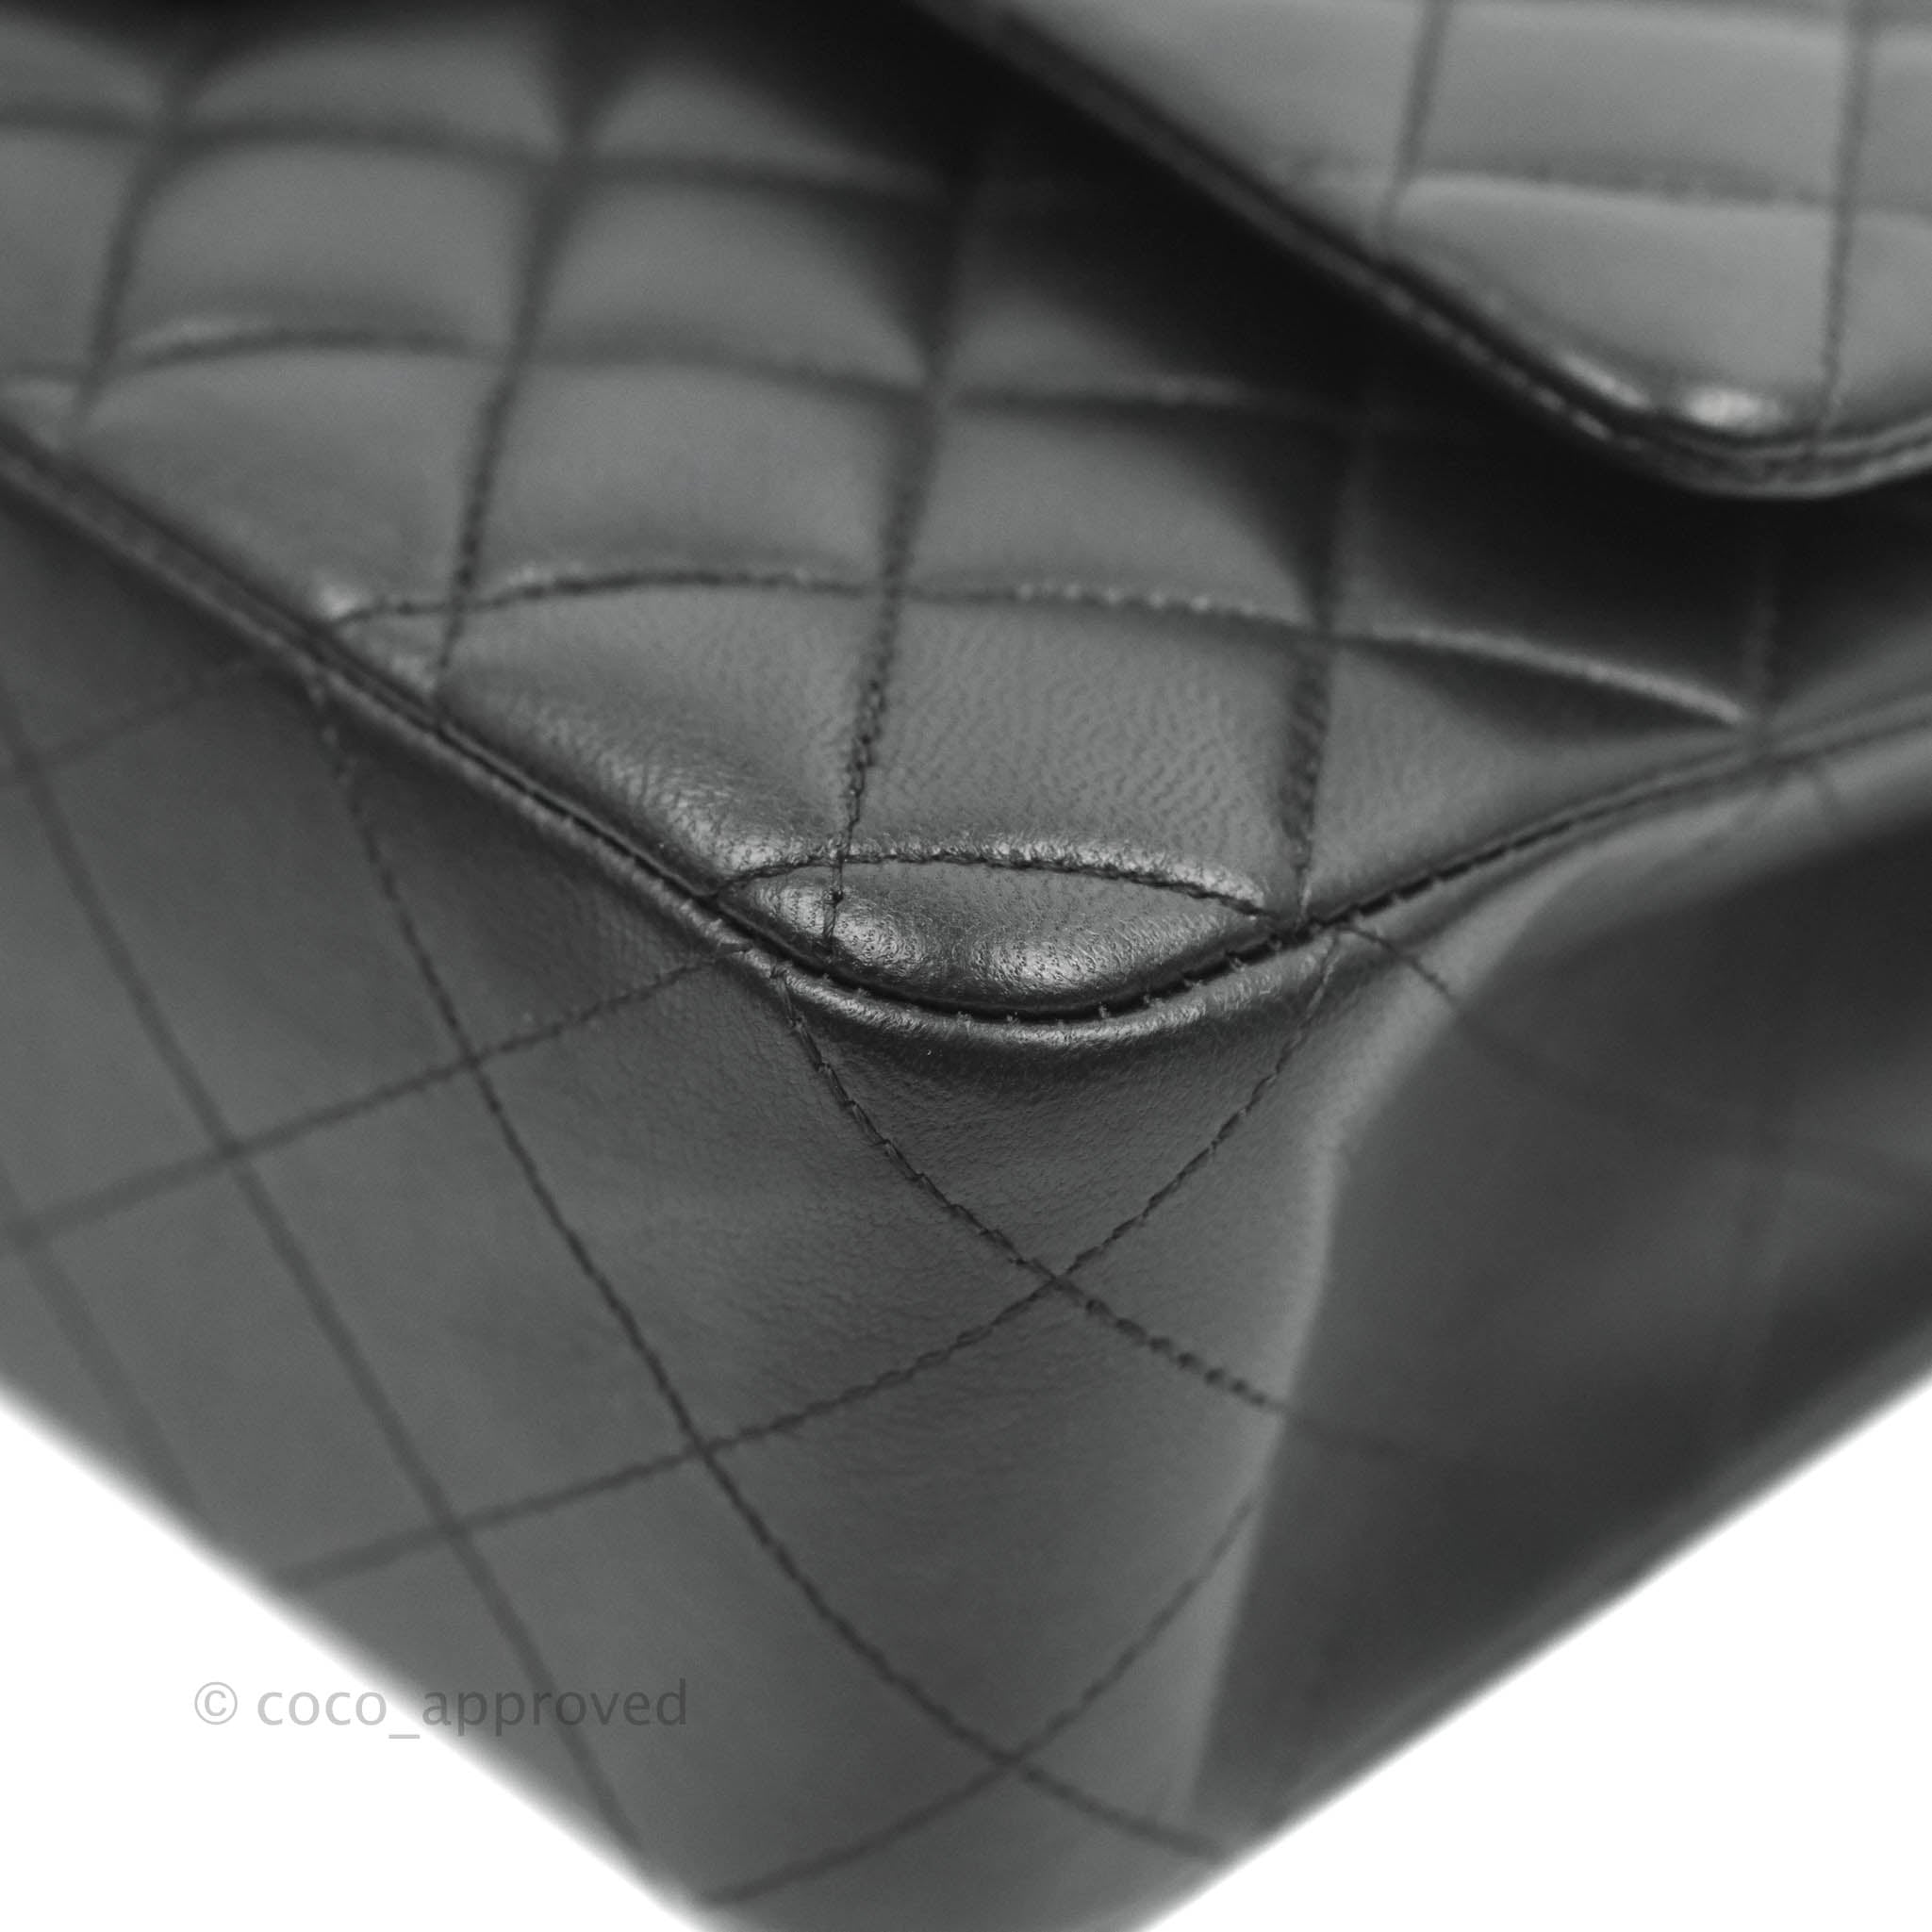 Chanel Black Lambskin Studded 'CC' Logo Tote Medium Q6B4NE1IK7001